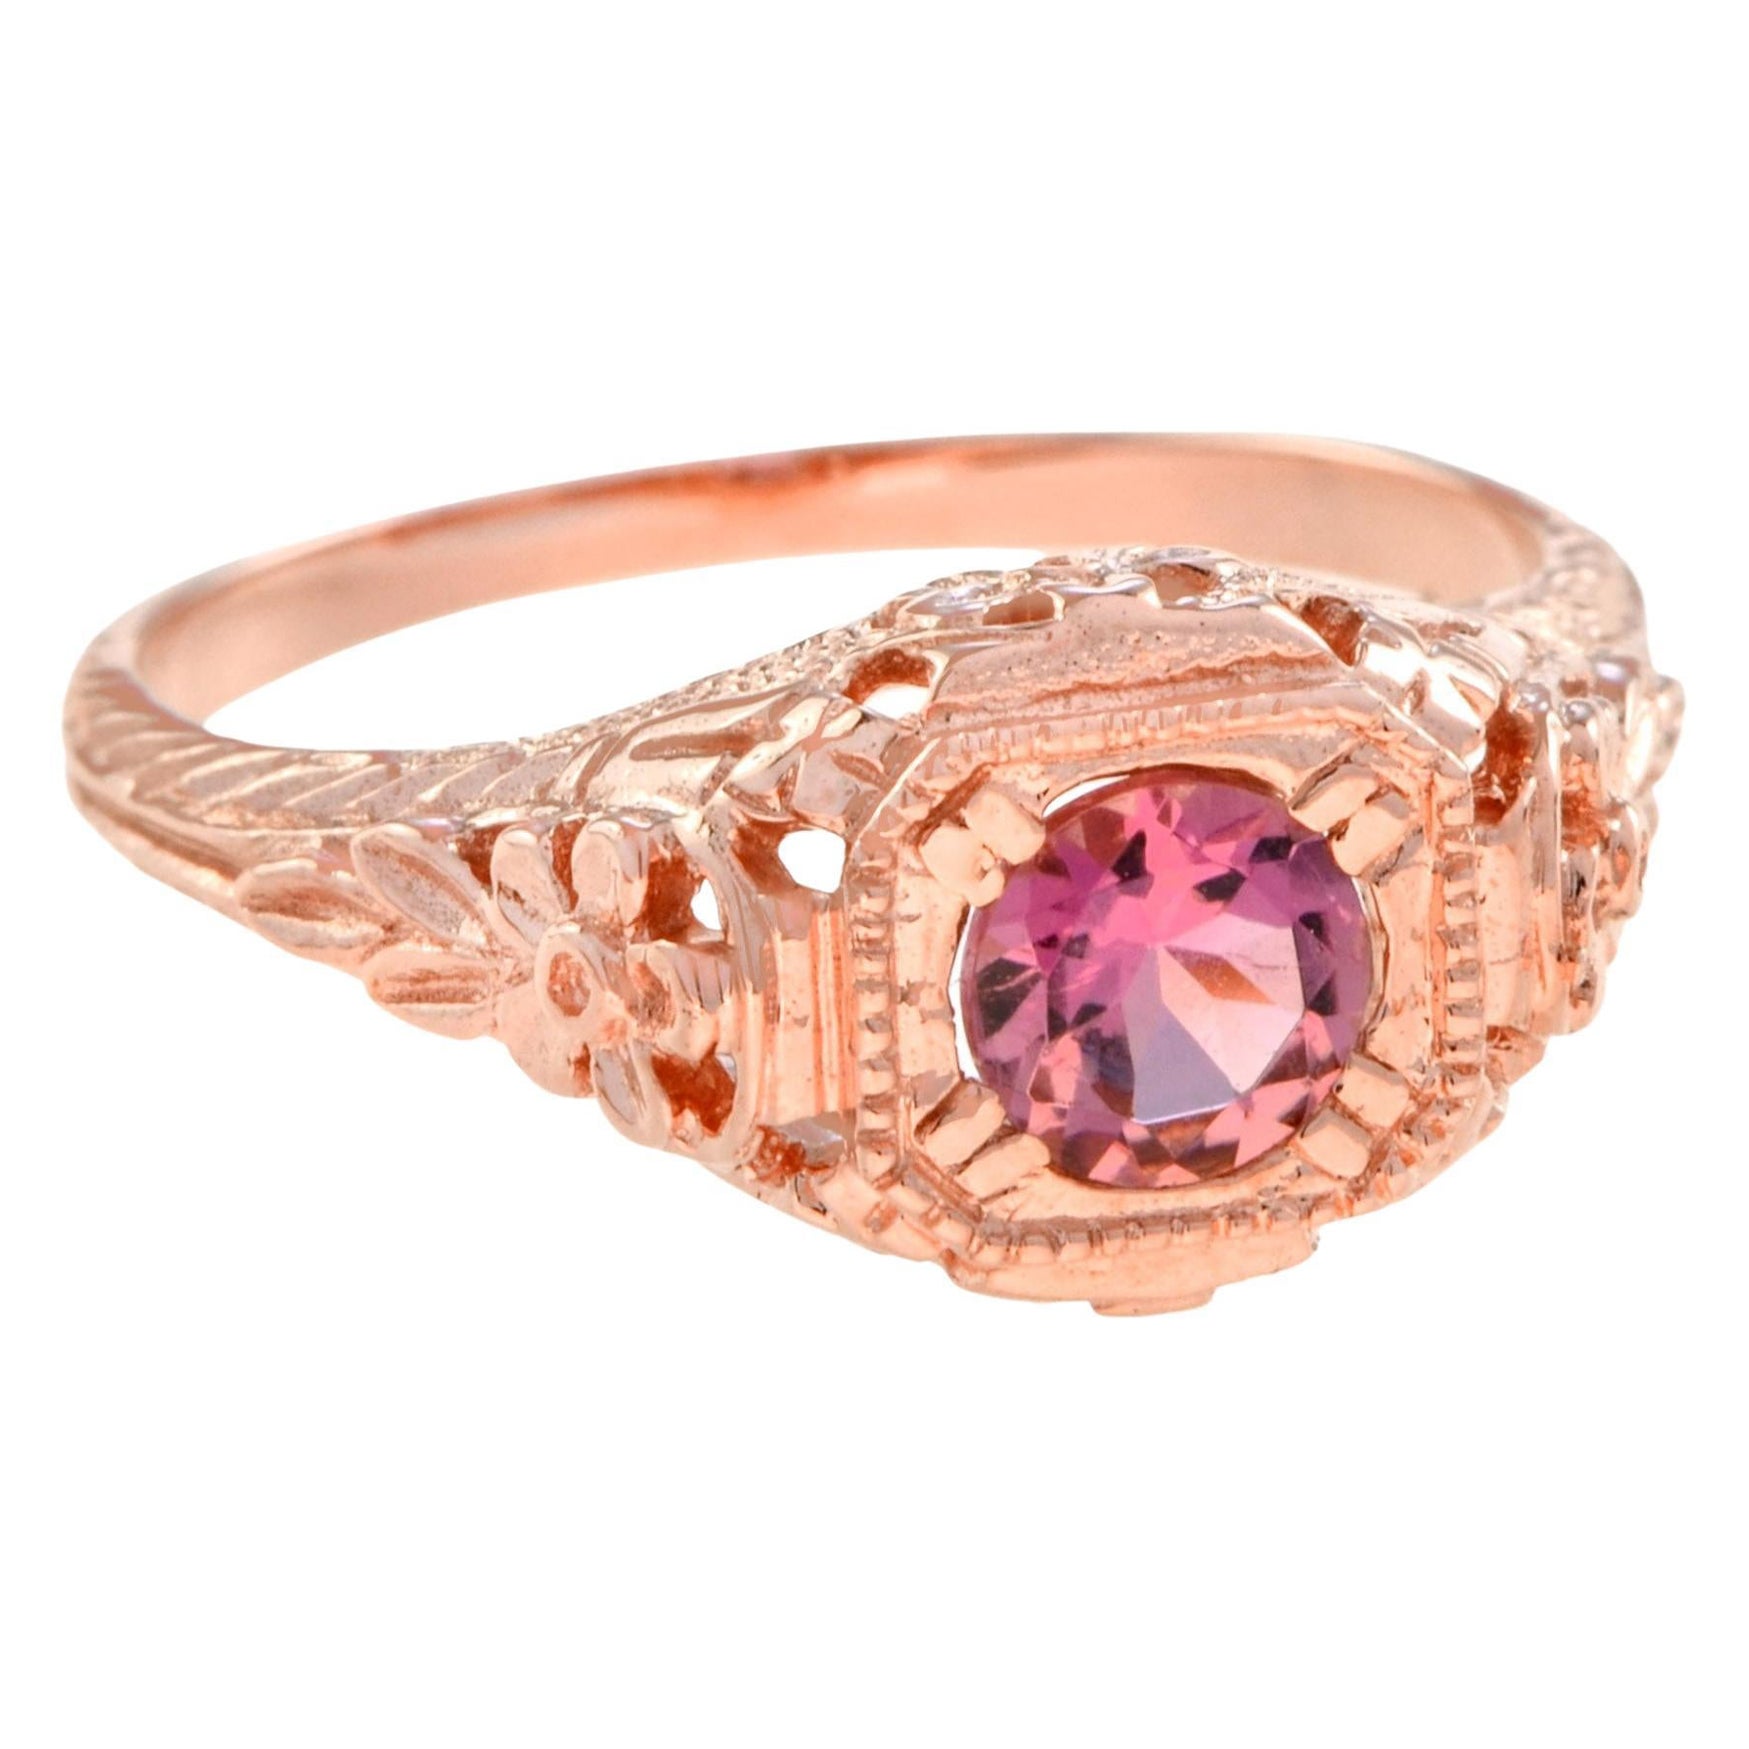 Pink Tourmaline Art Deco Style Filigree Engagement Ring in 14K Rose Gold